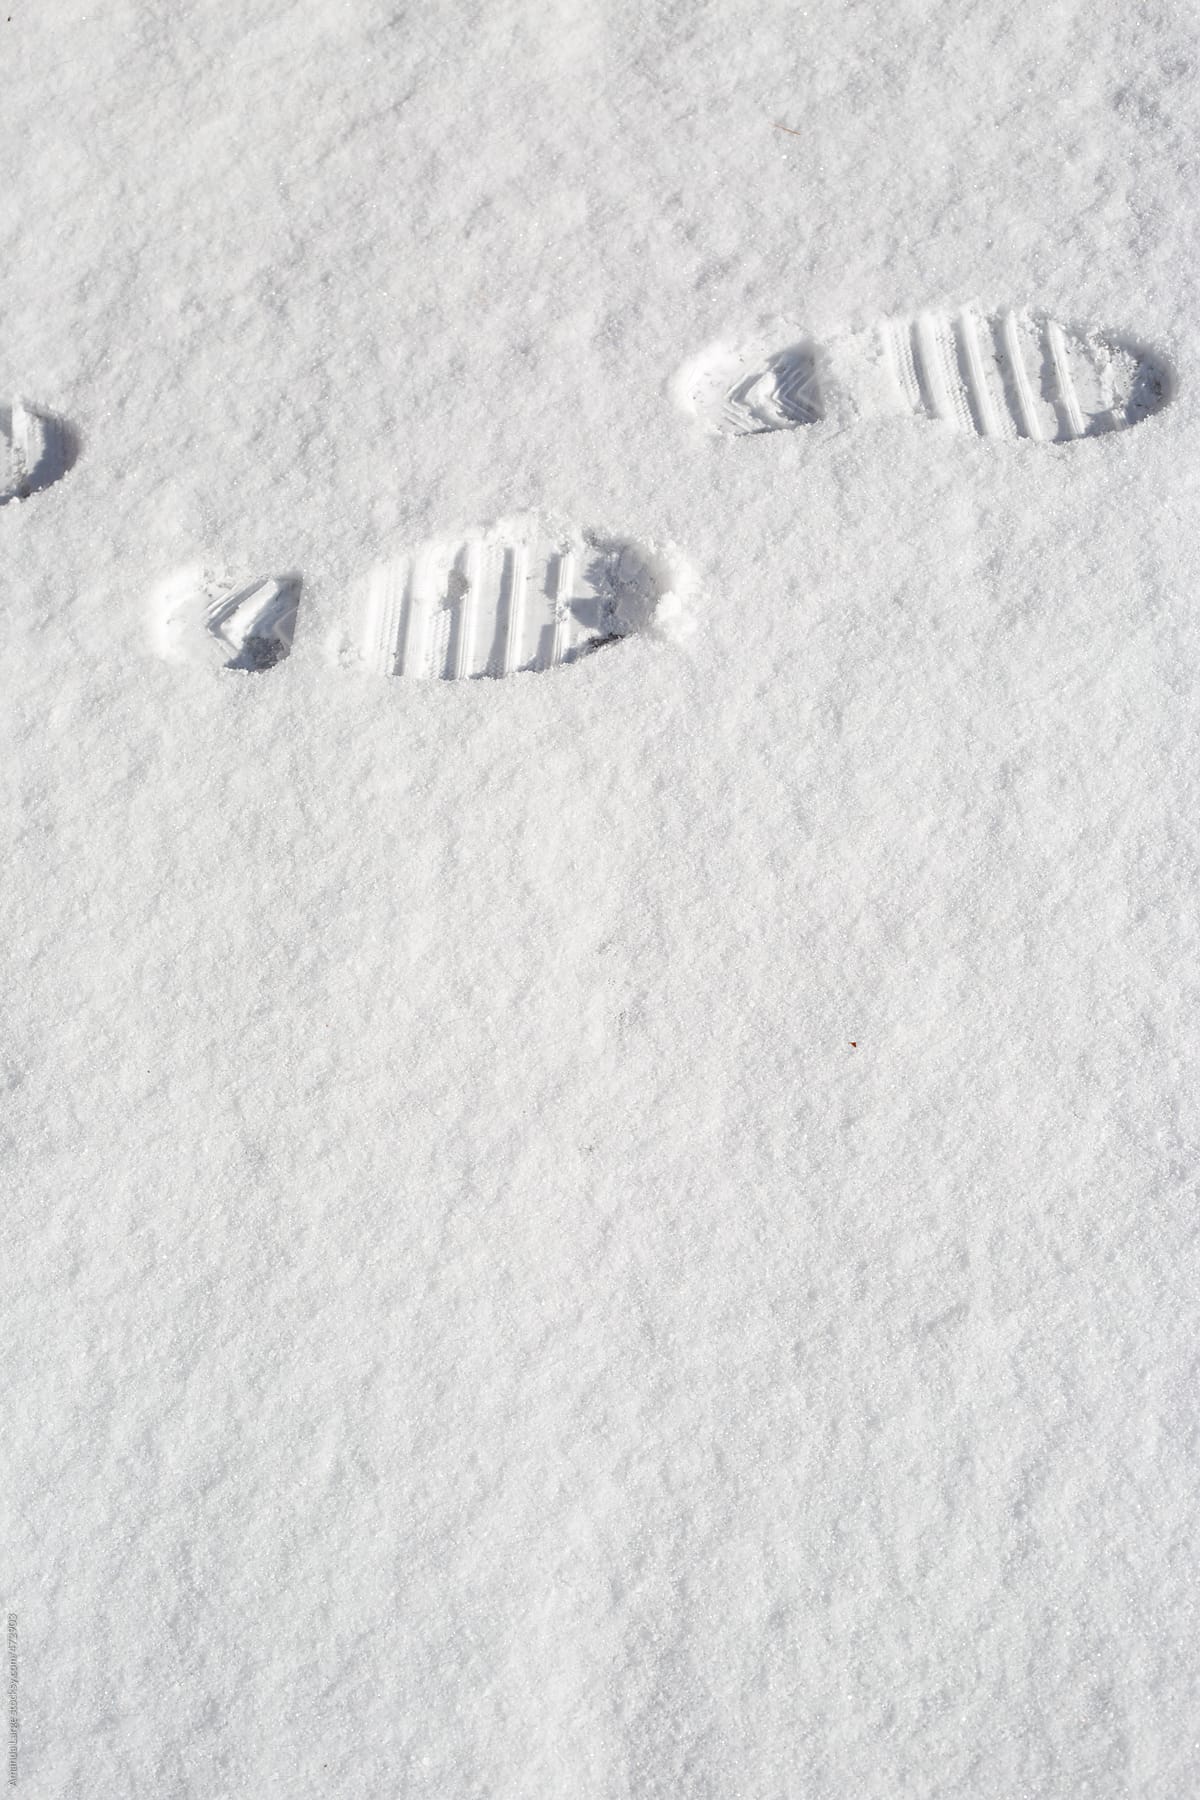 footprints in fresh snow